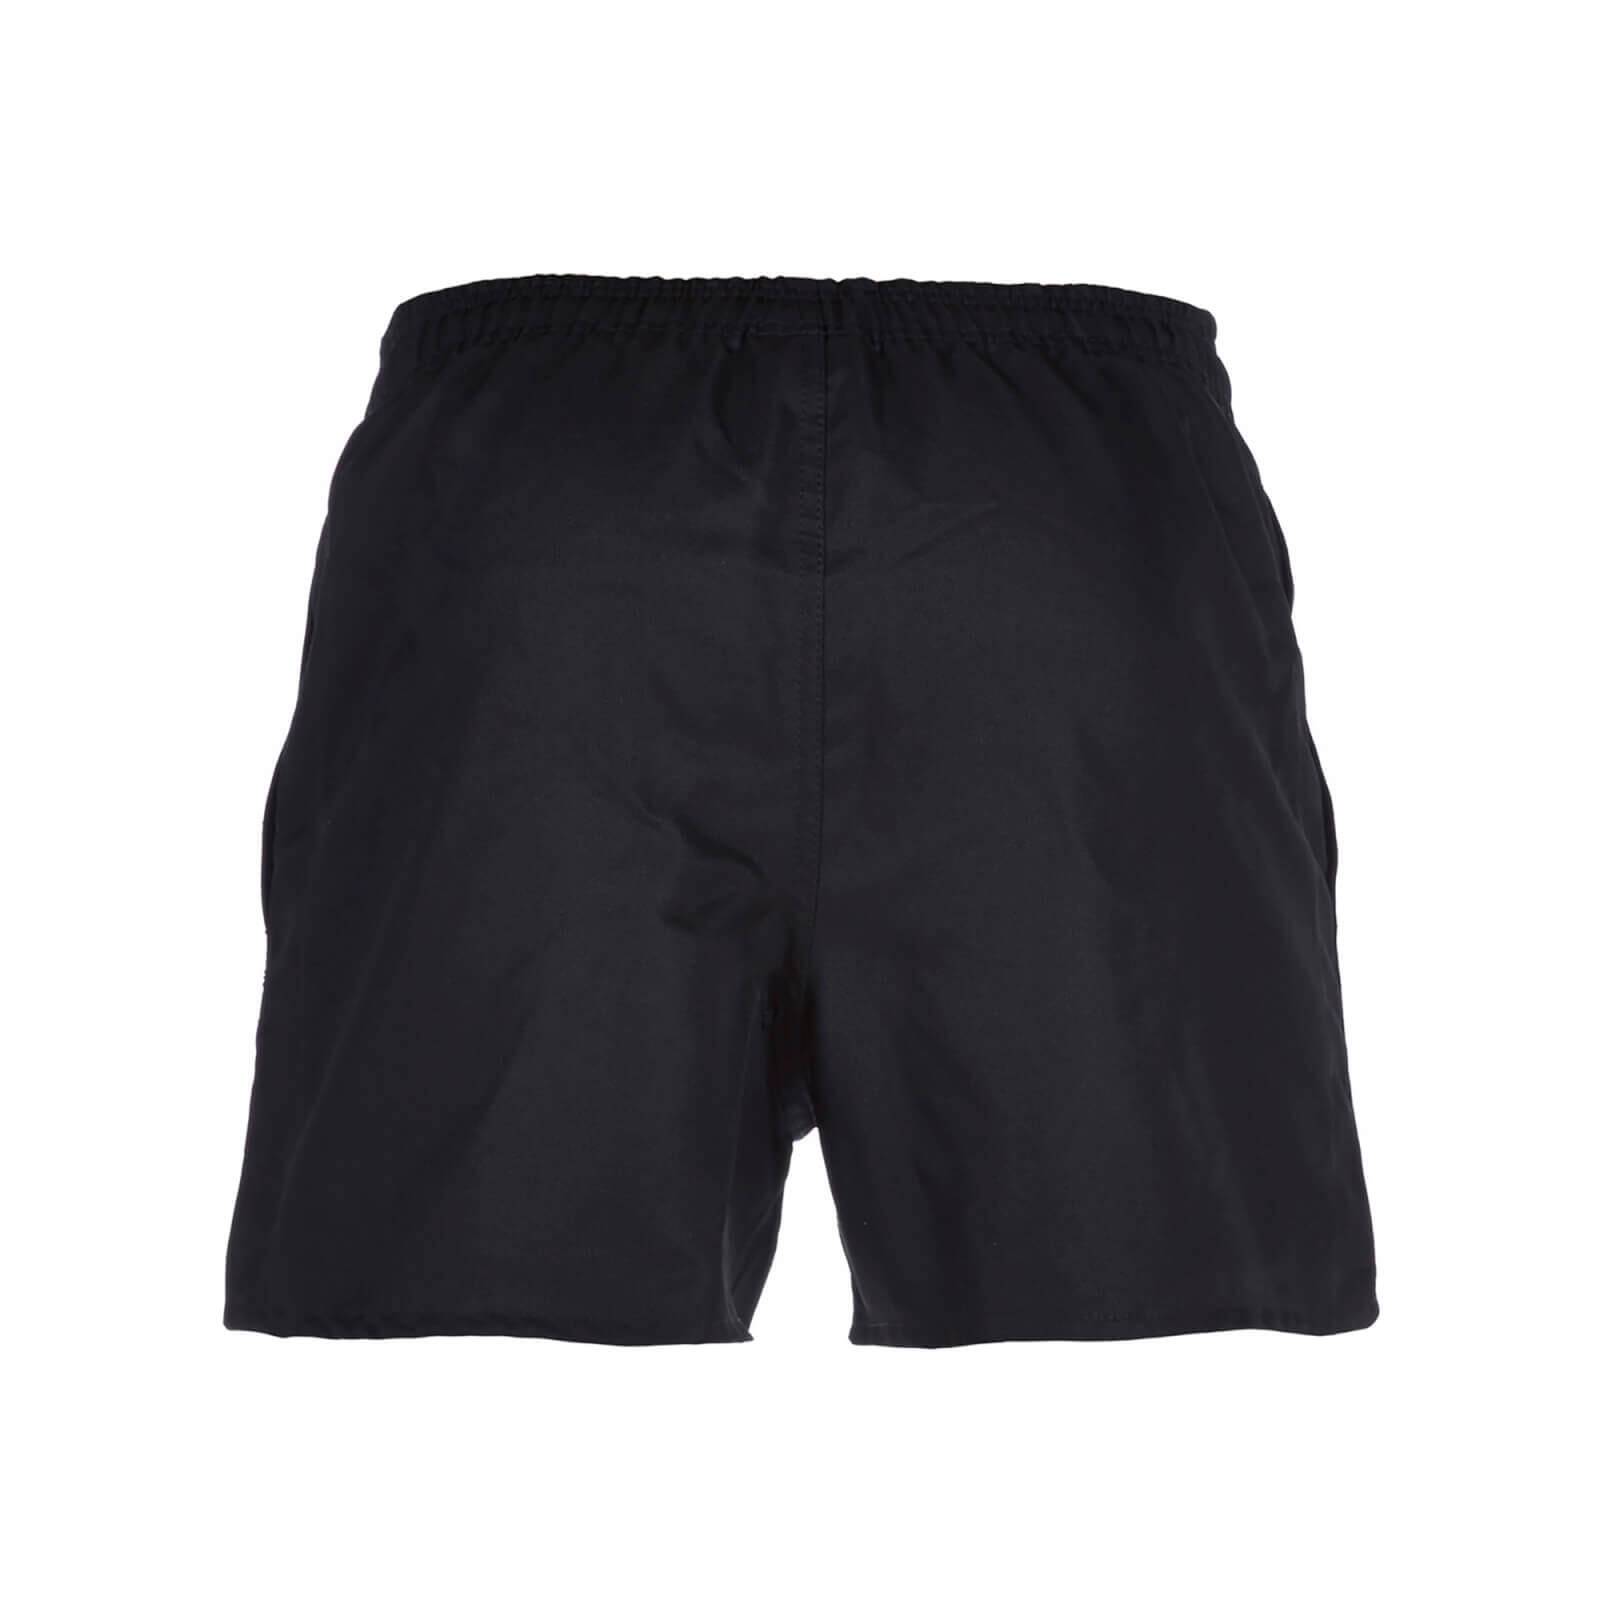 Mens Professional Polyester Shorts (Black) 2/4